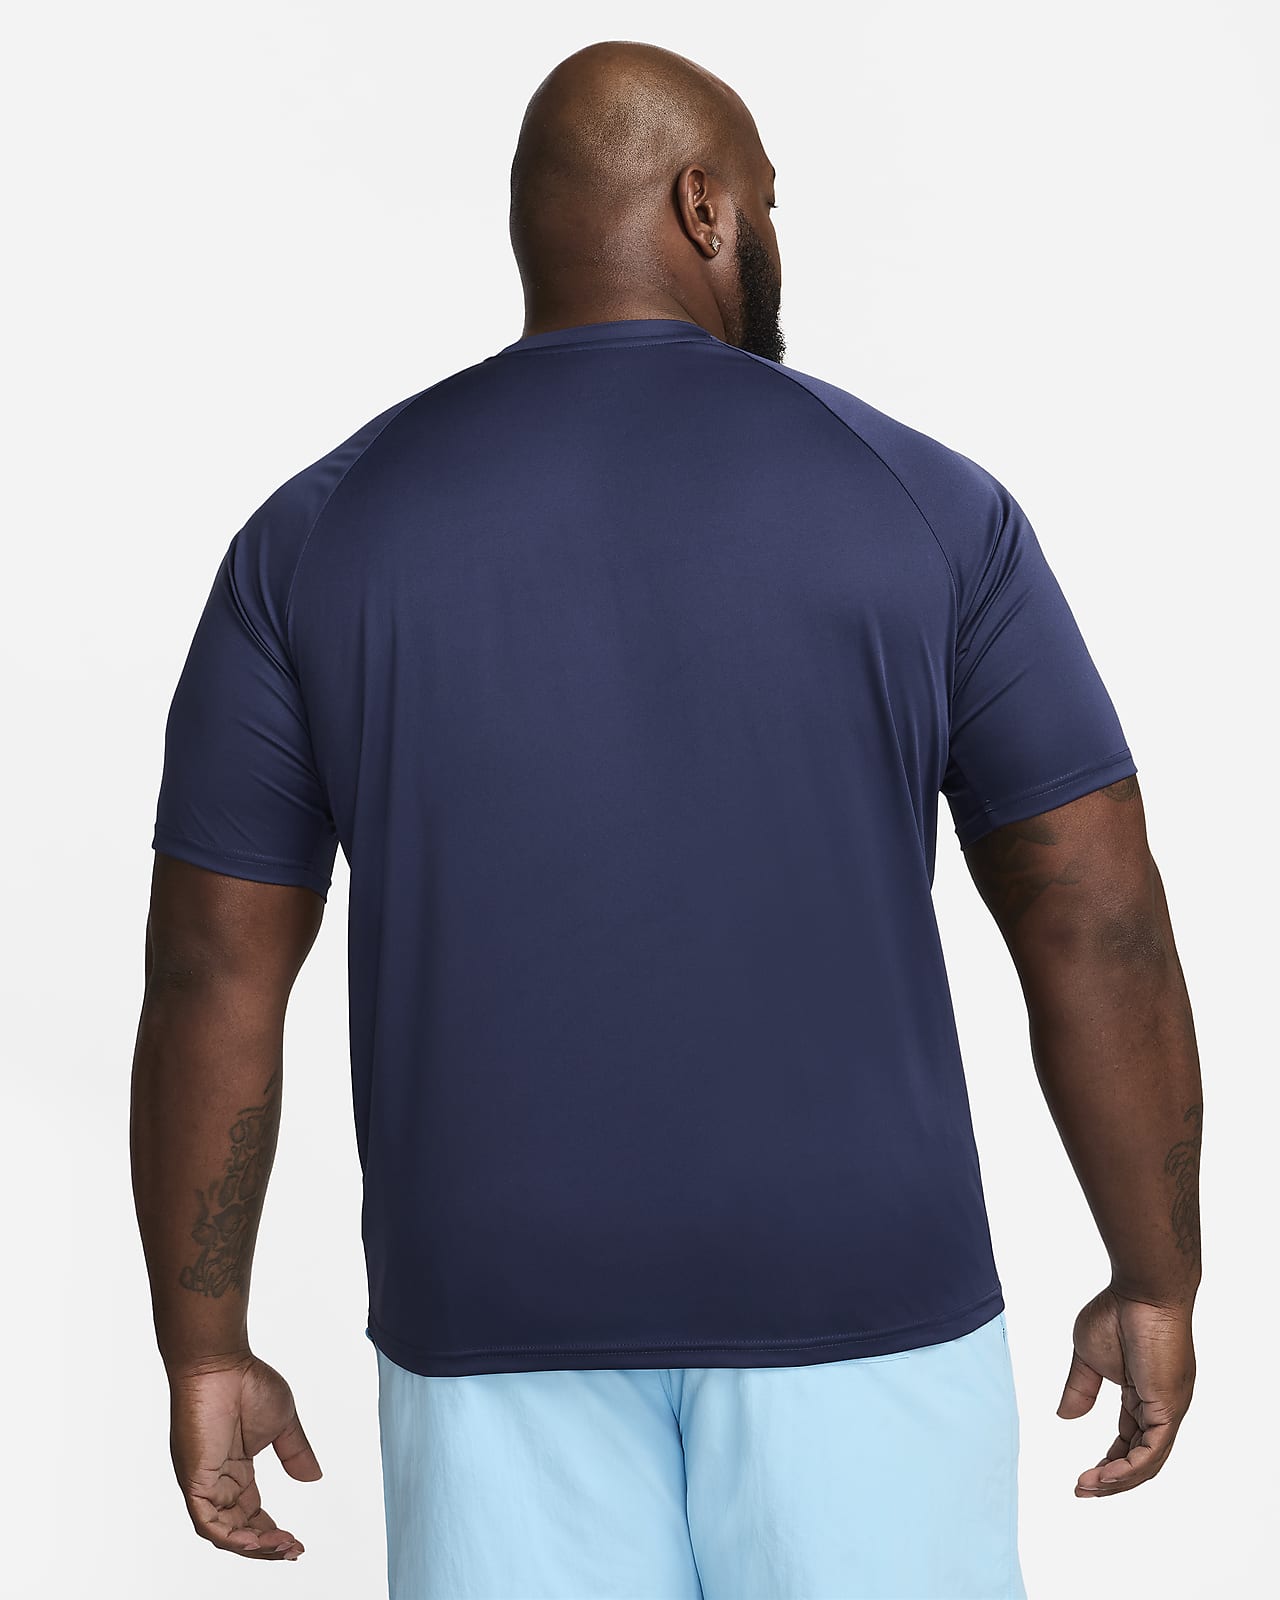 Camiseta Hombre Fitness Manga Corta UV Natación Deporte Secado Rápido - ▽